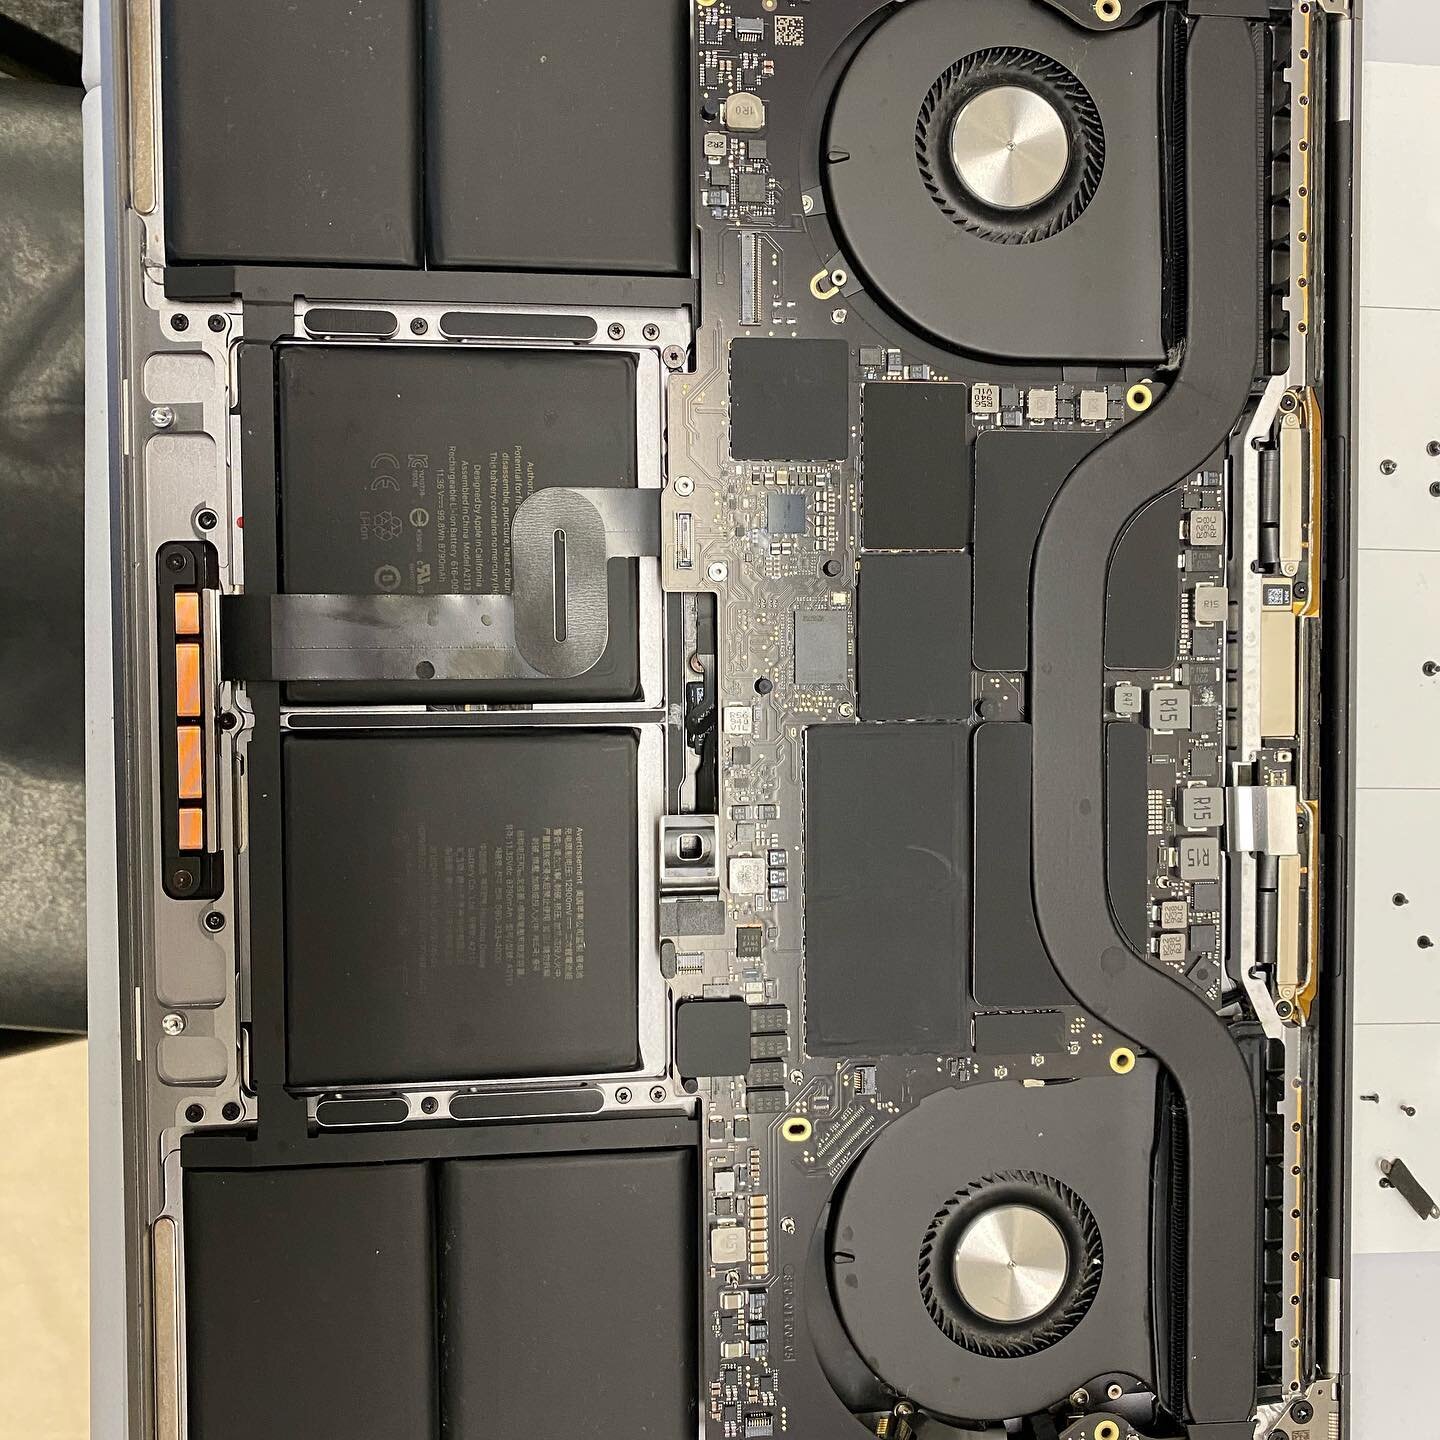 Water damaged 2019 MacBook Pro 16 inch FIXED!
#macbookpro #waterdamage #macbookclinicframimgham